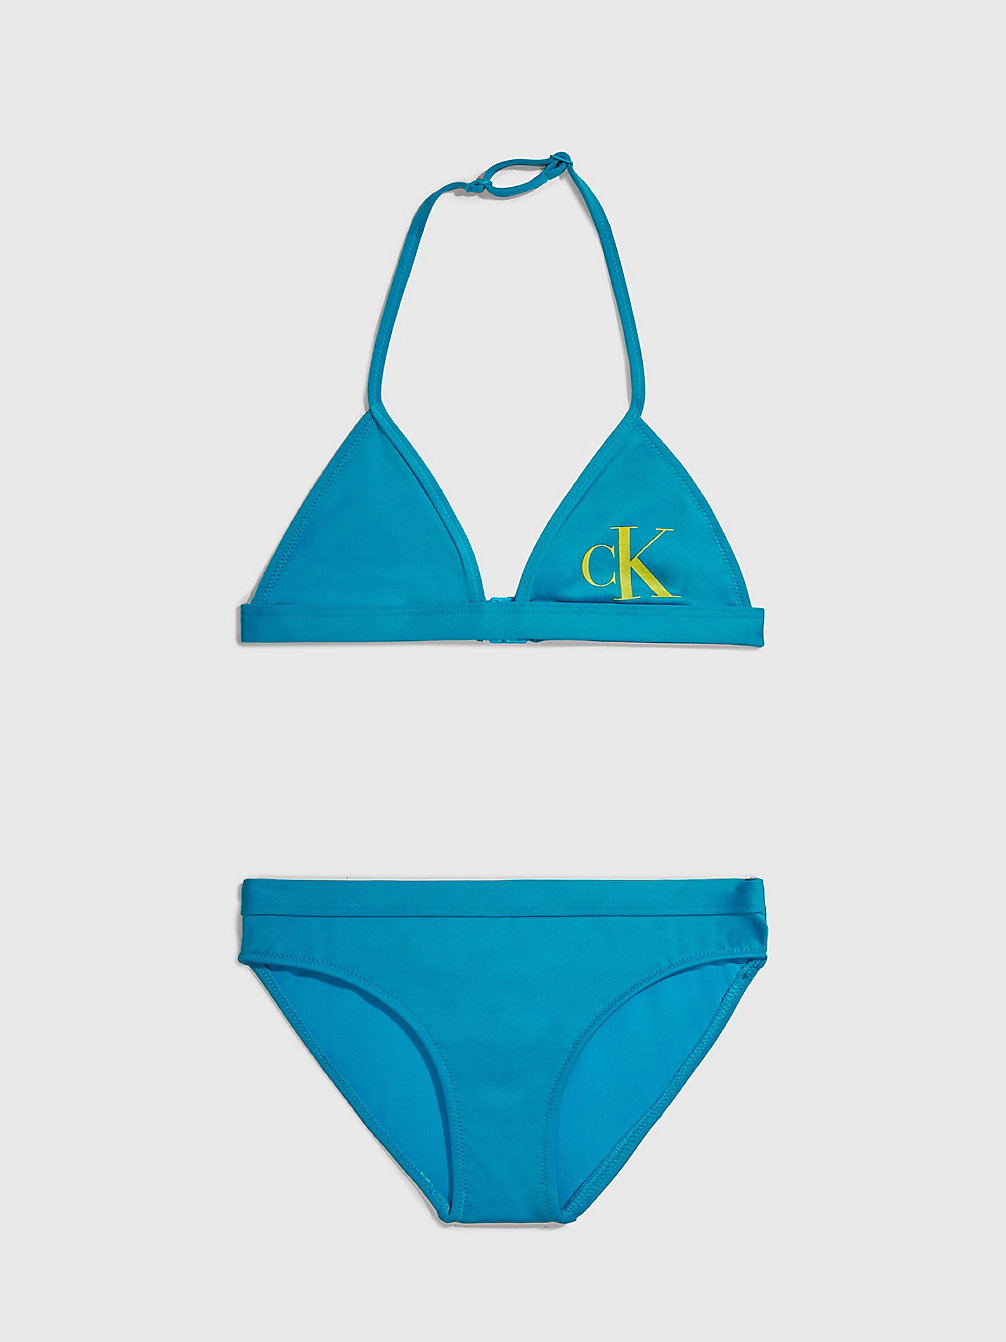 CLEAR TURQUOISE Girls Triangle Bikini Set - CK Monogram undefined girls Calvin Klein